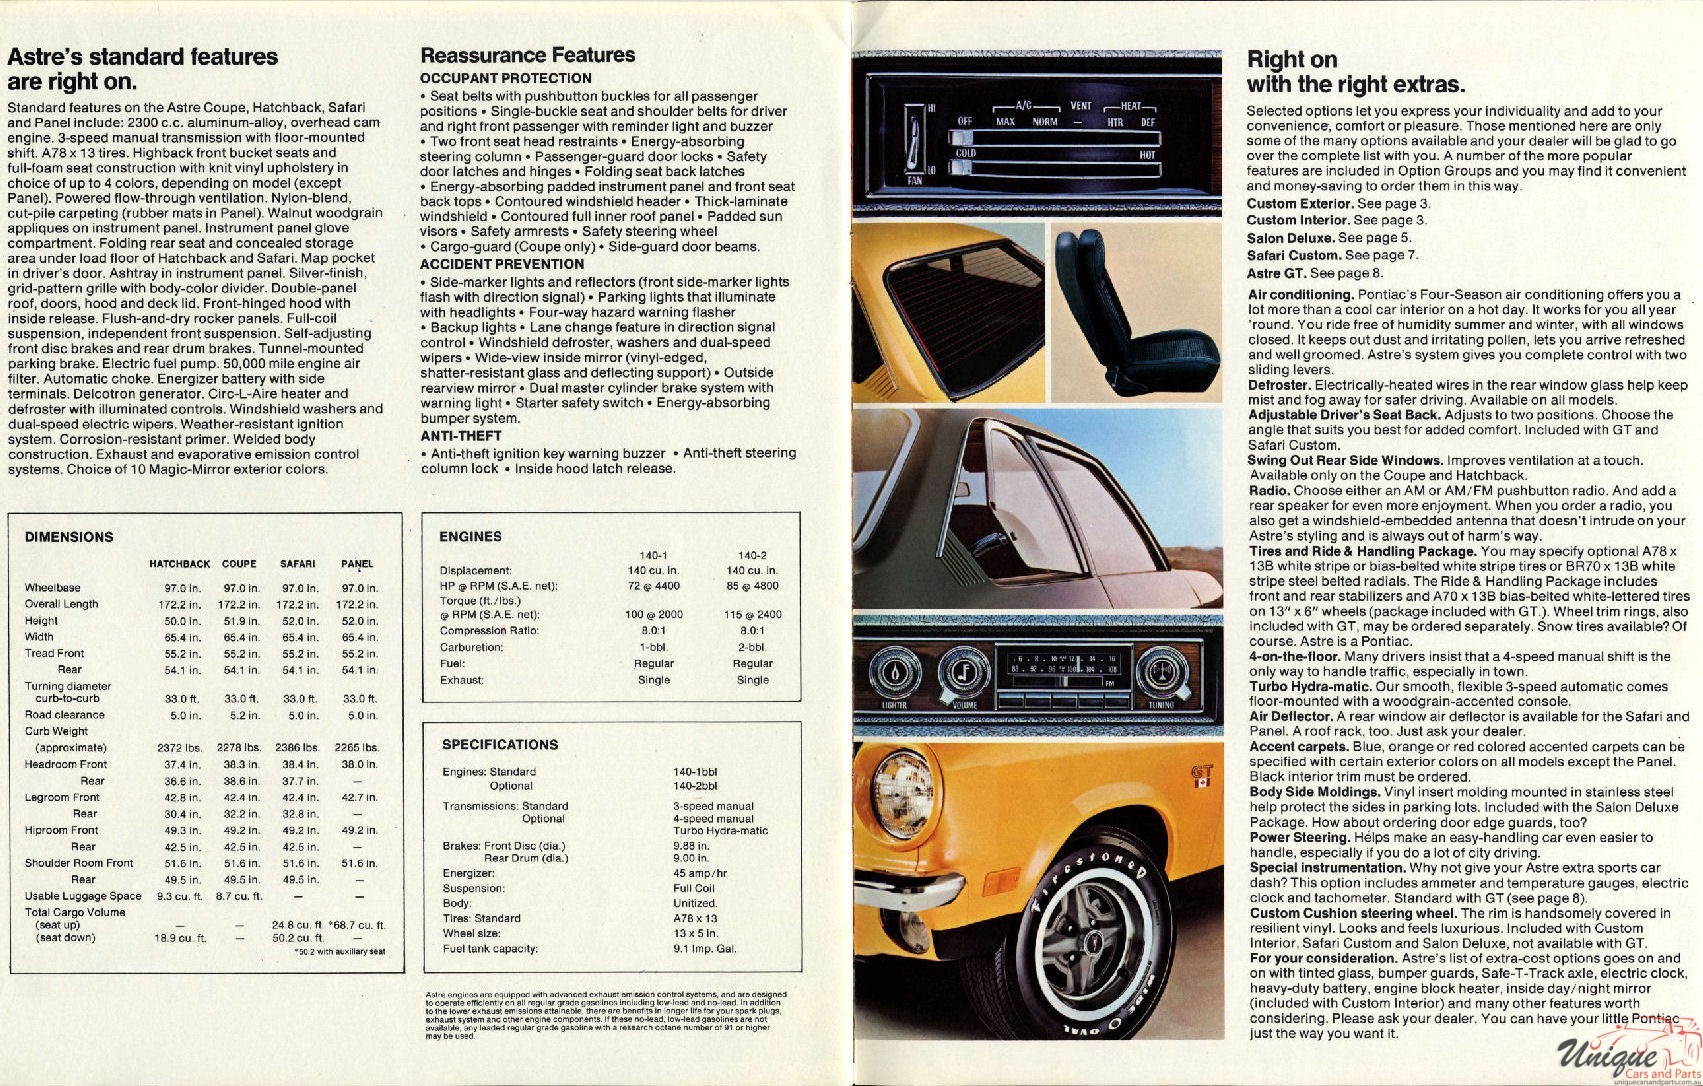 1973 Canadian Pontiac Astre Brochure Page 2